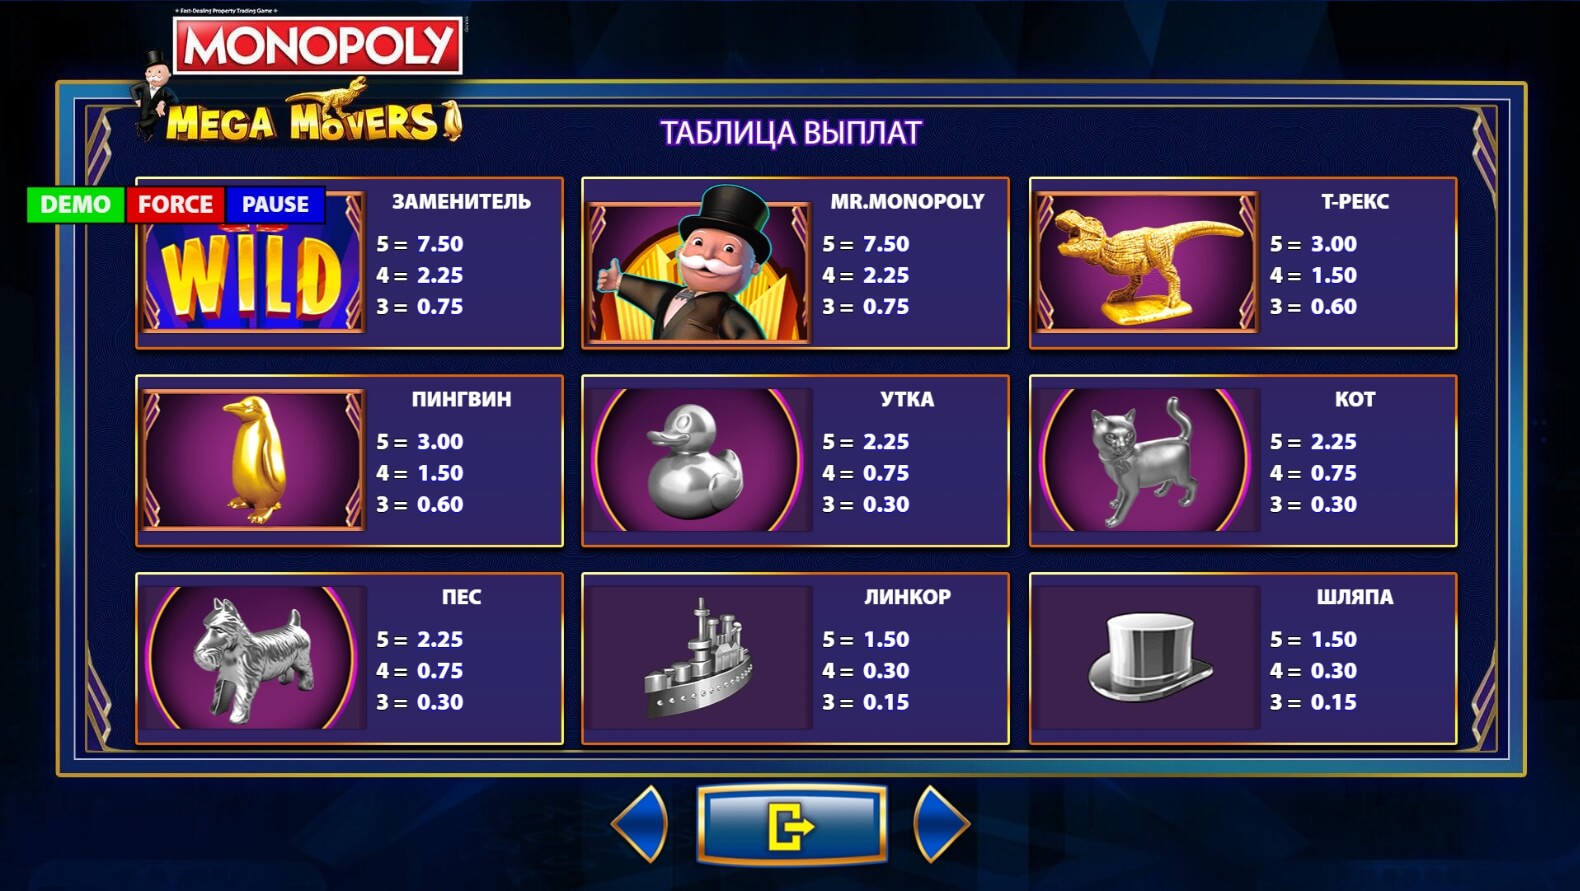 monopoly mega movers slot machine detail image 7